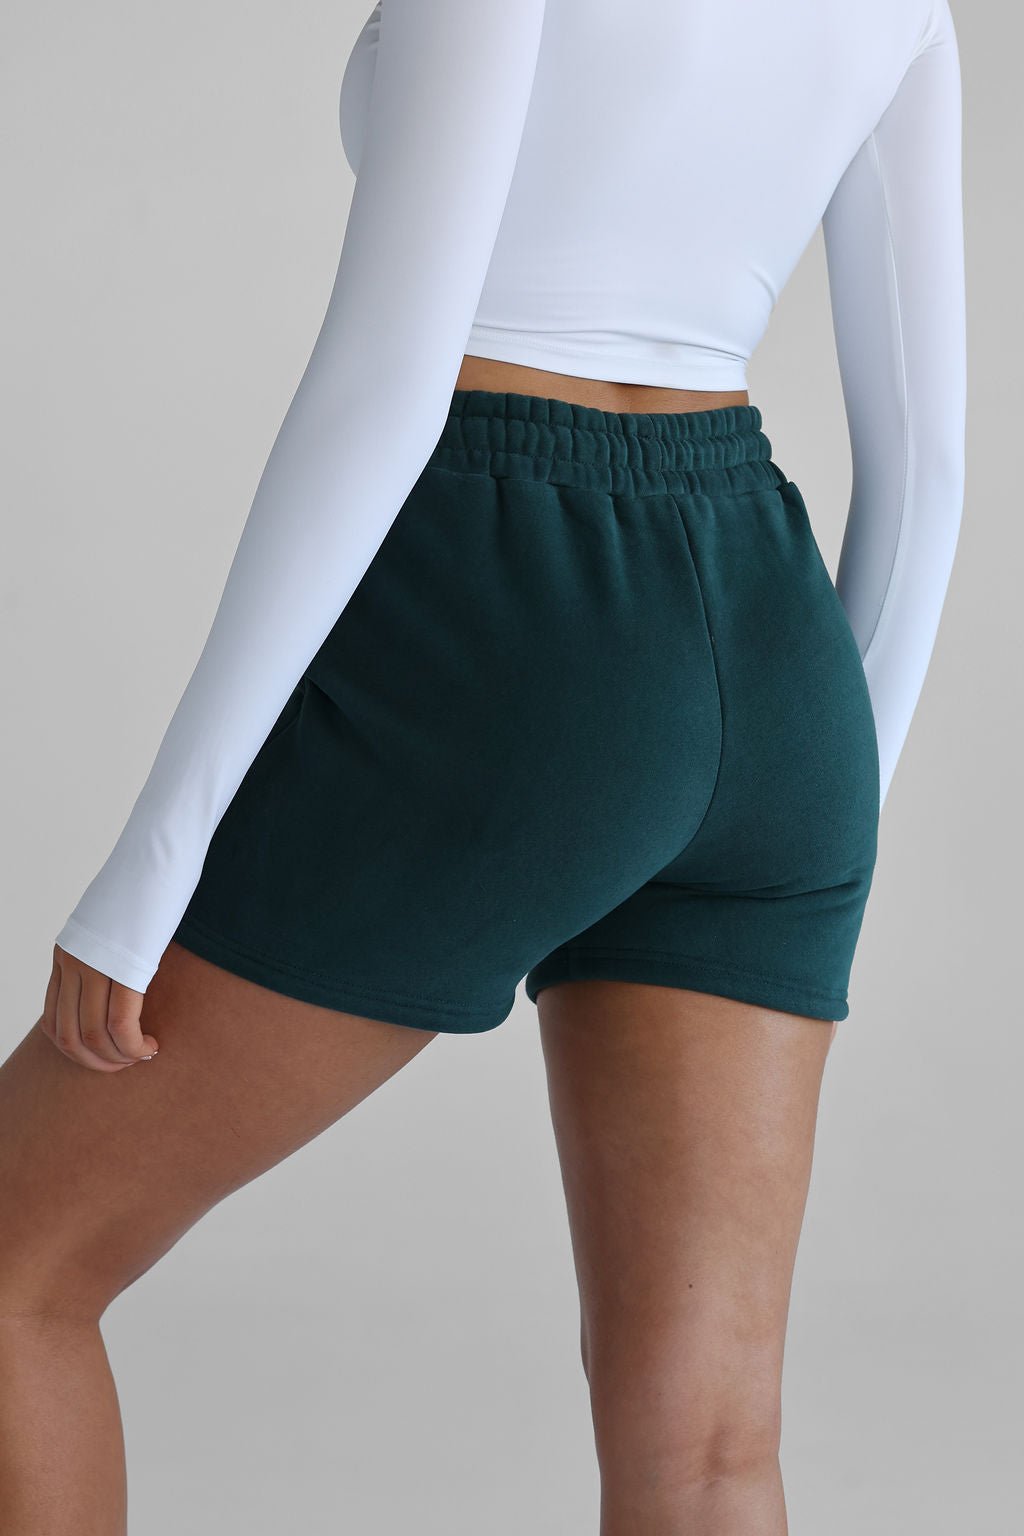 Sports Club Shorts - Boston Green - LEELO ACTIVE